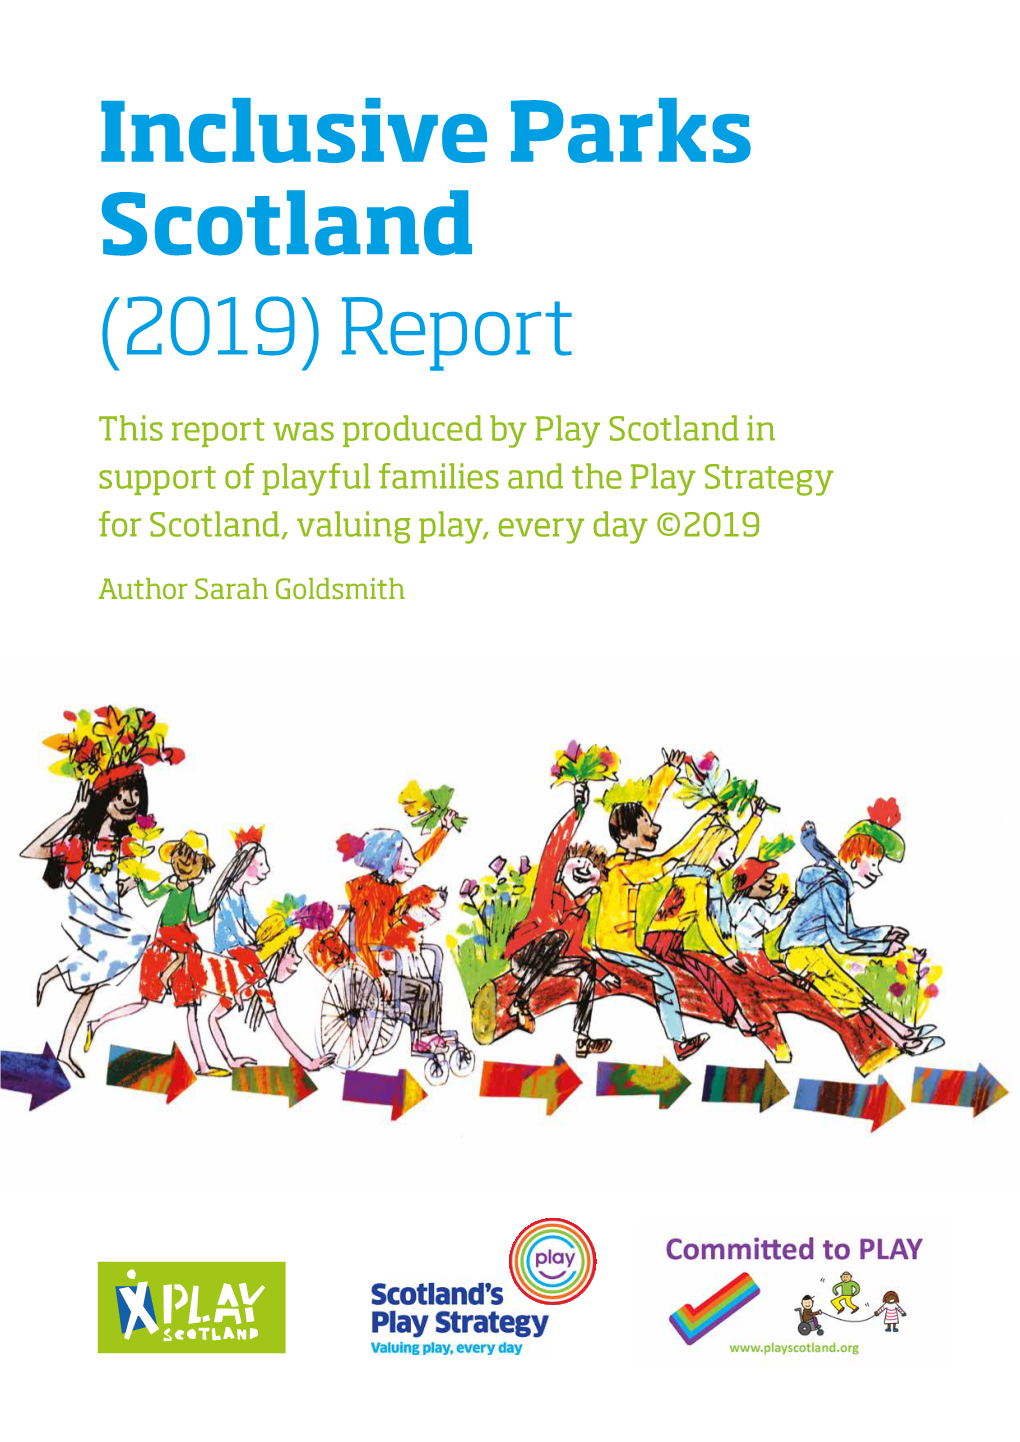 Inclusive Parks Scotland Report 2019 (Play Scotland)